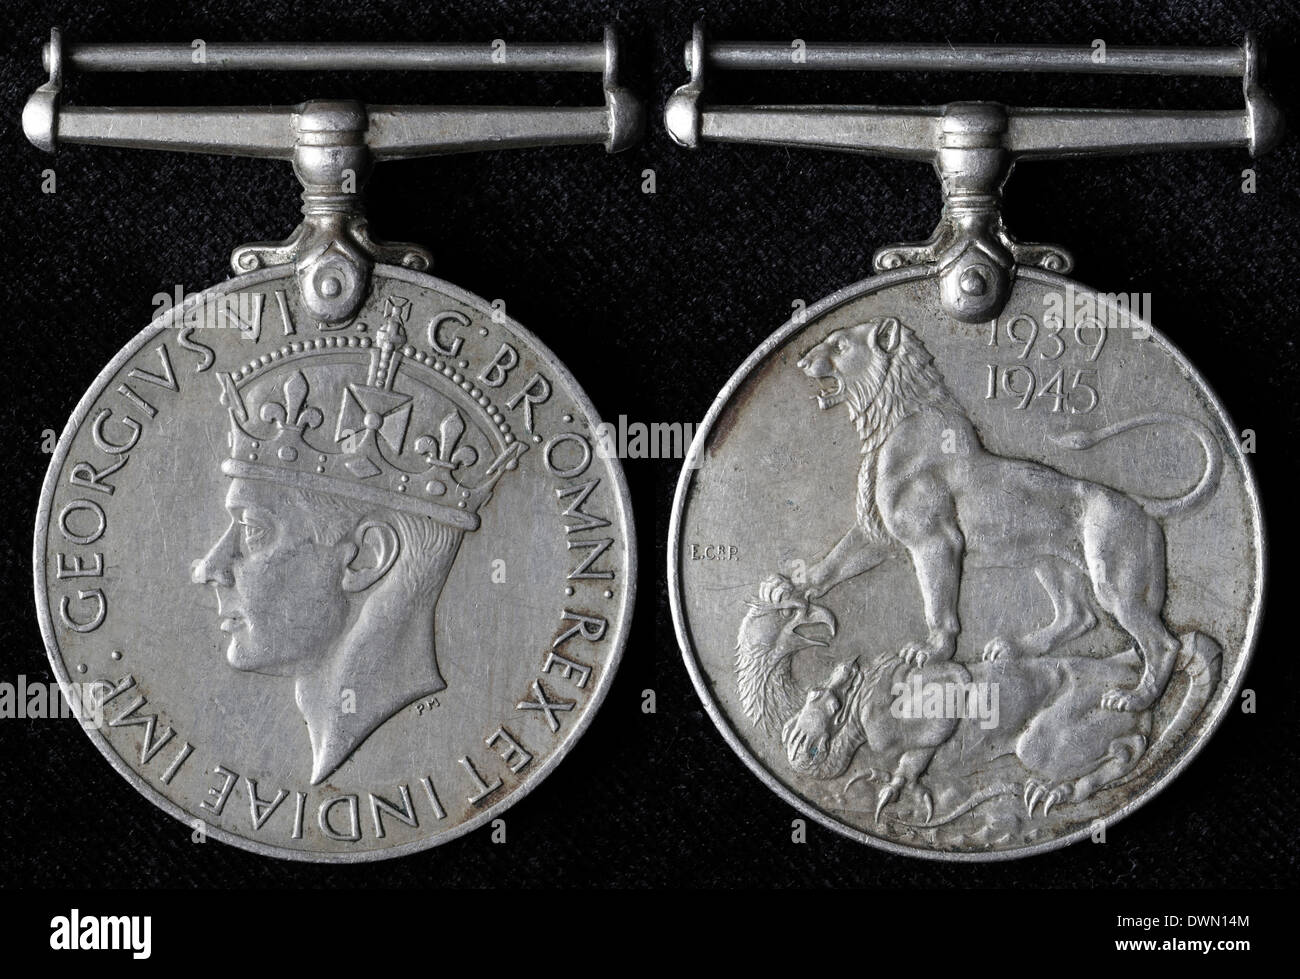 British medaglia di guerra (1939-1945) Foto Stock